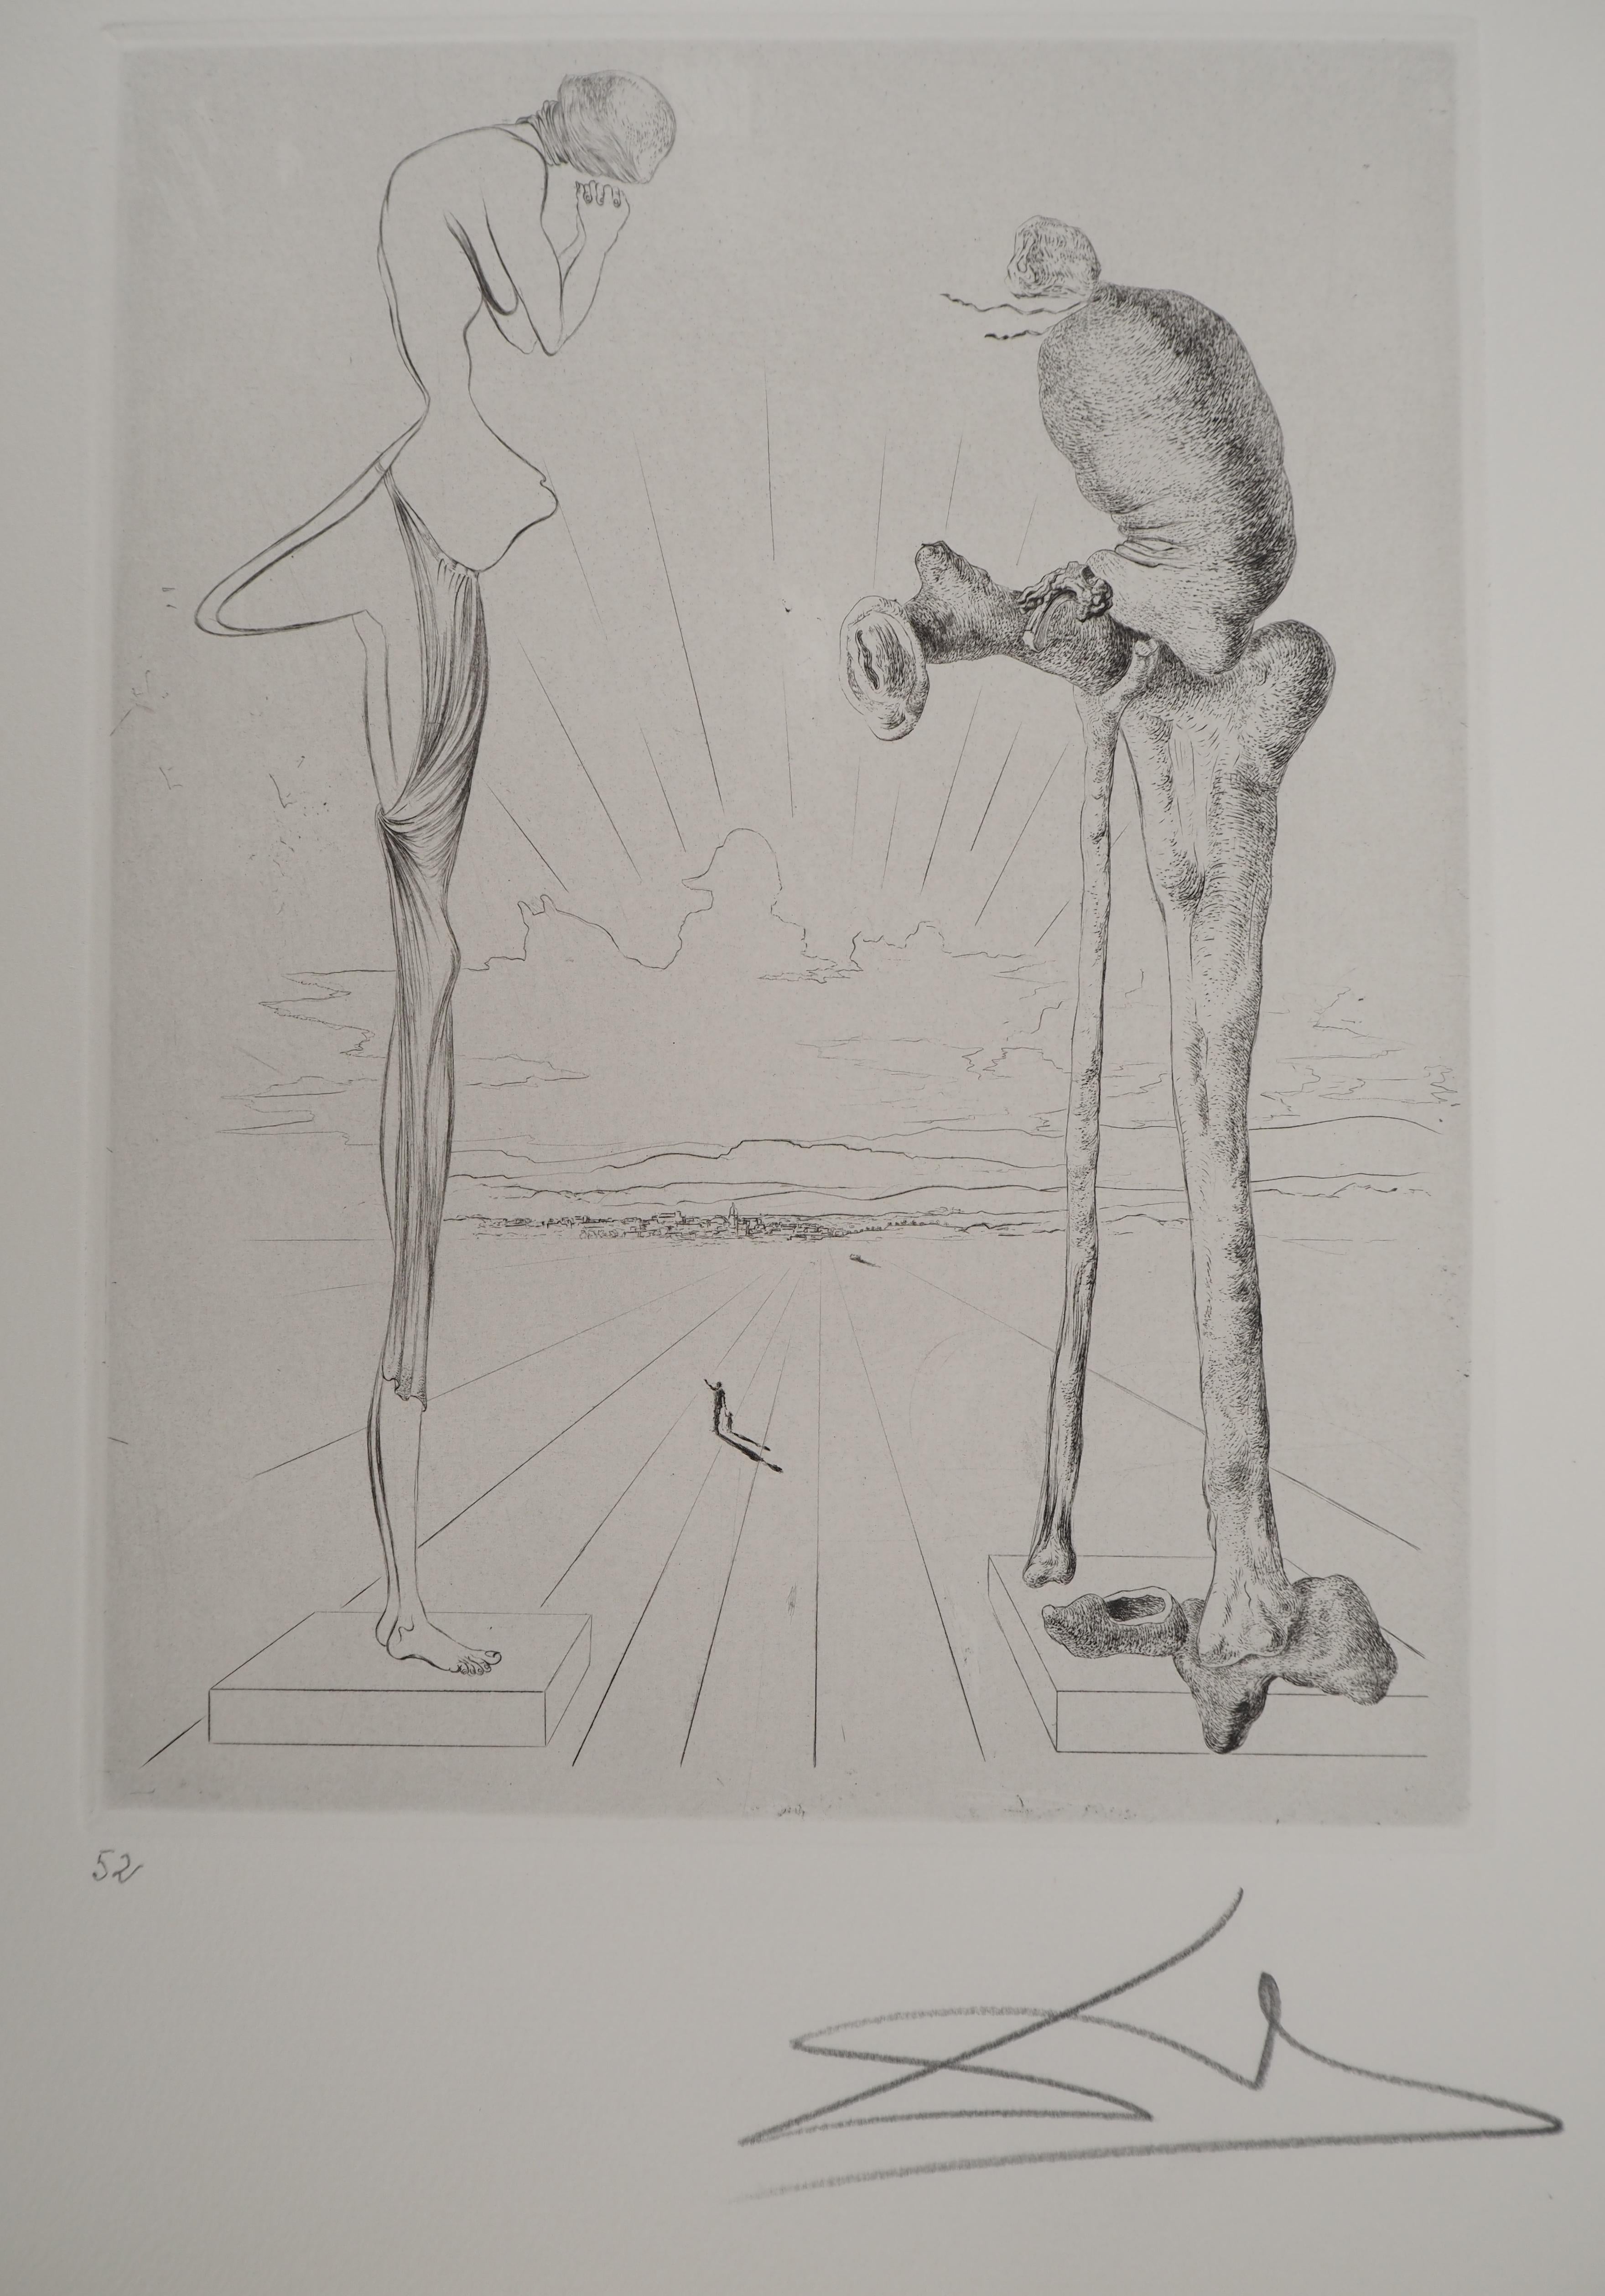 Maldoror : The giant with a bag - Original etching, HANDSIGNED - Print by Salvador Dalí